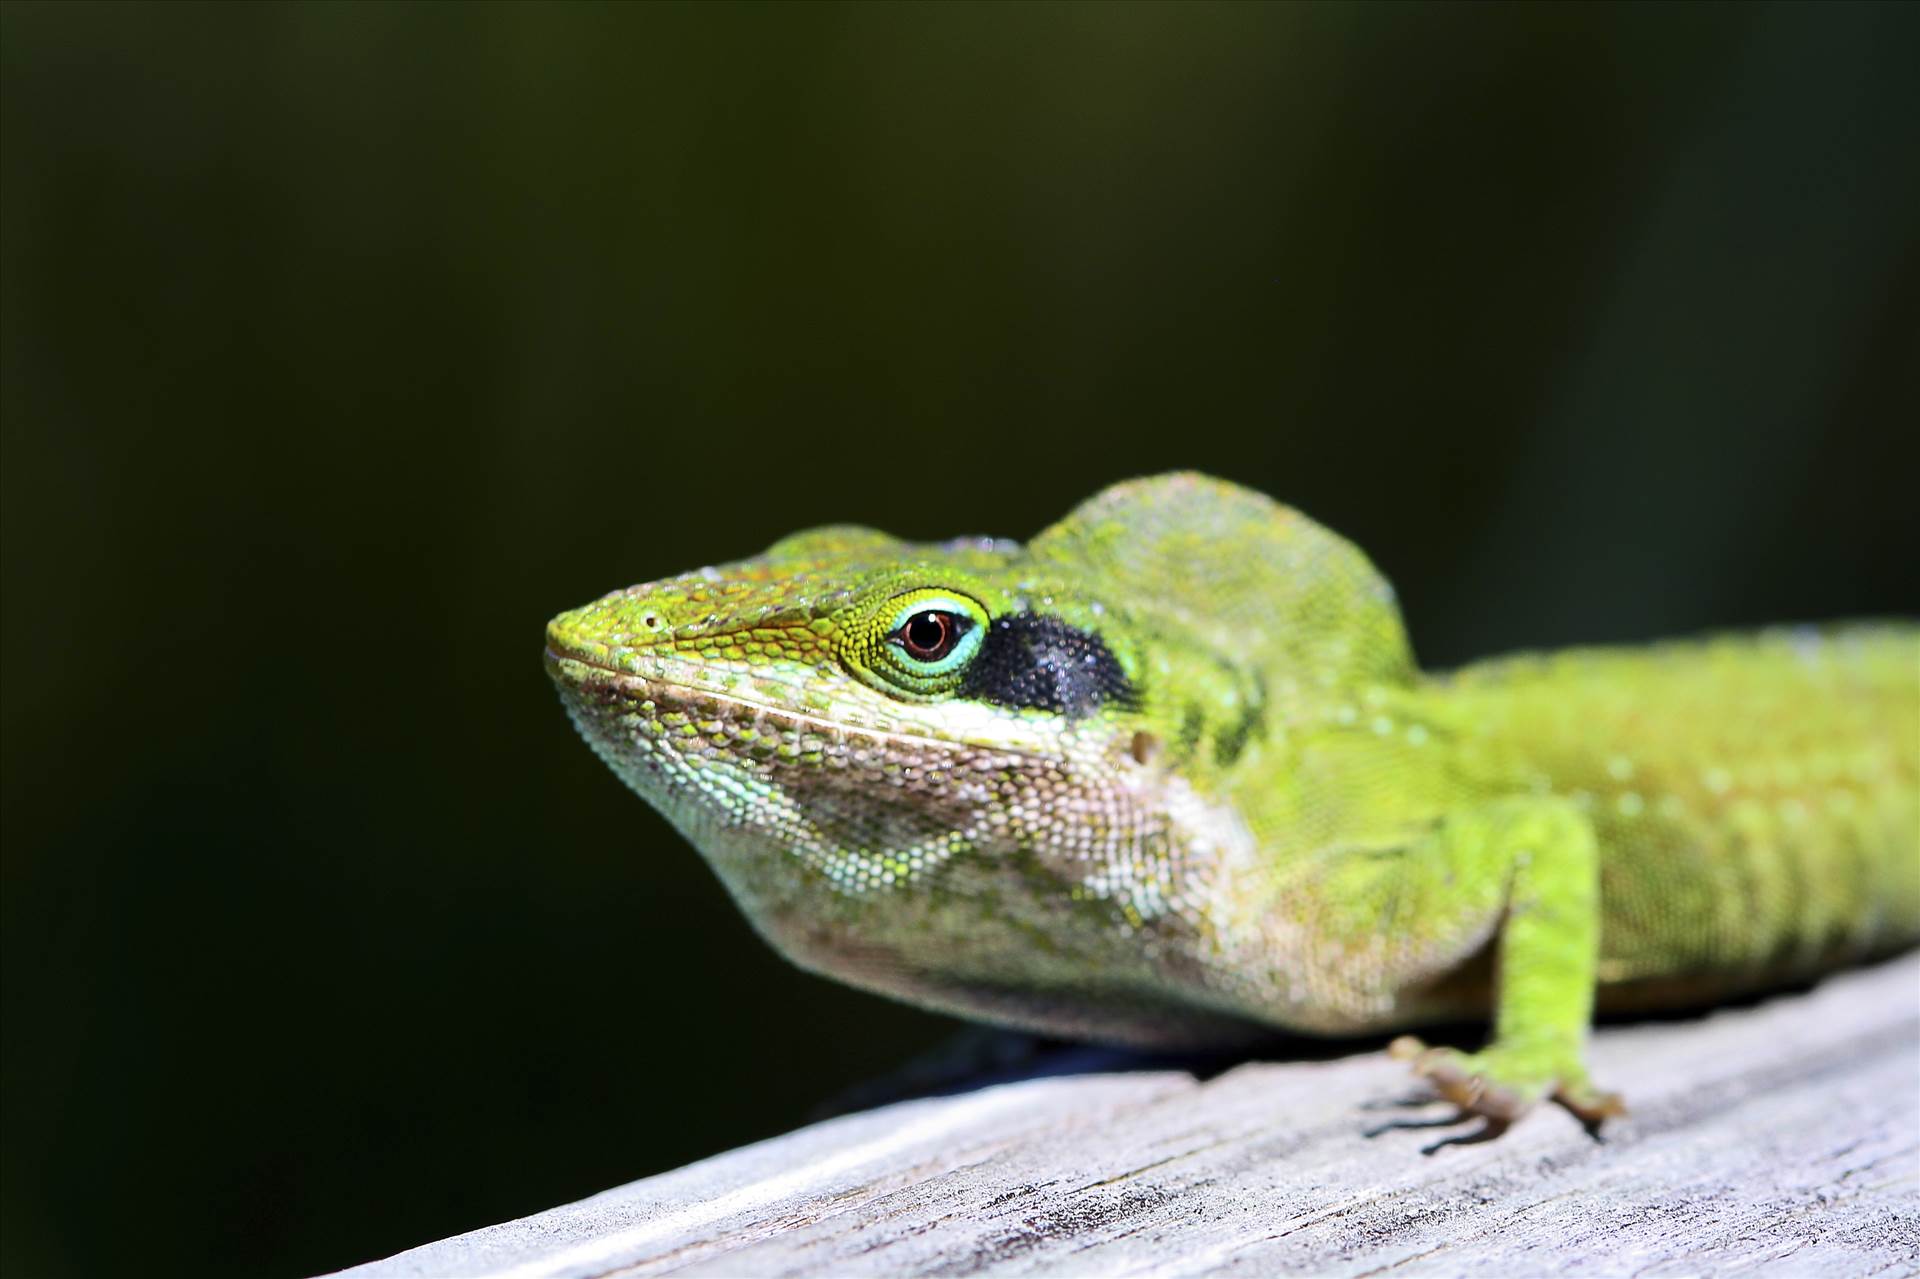 Lizard.jpg  by jennyellenphotography